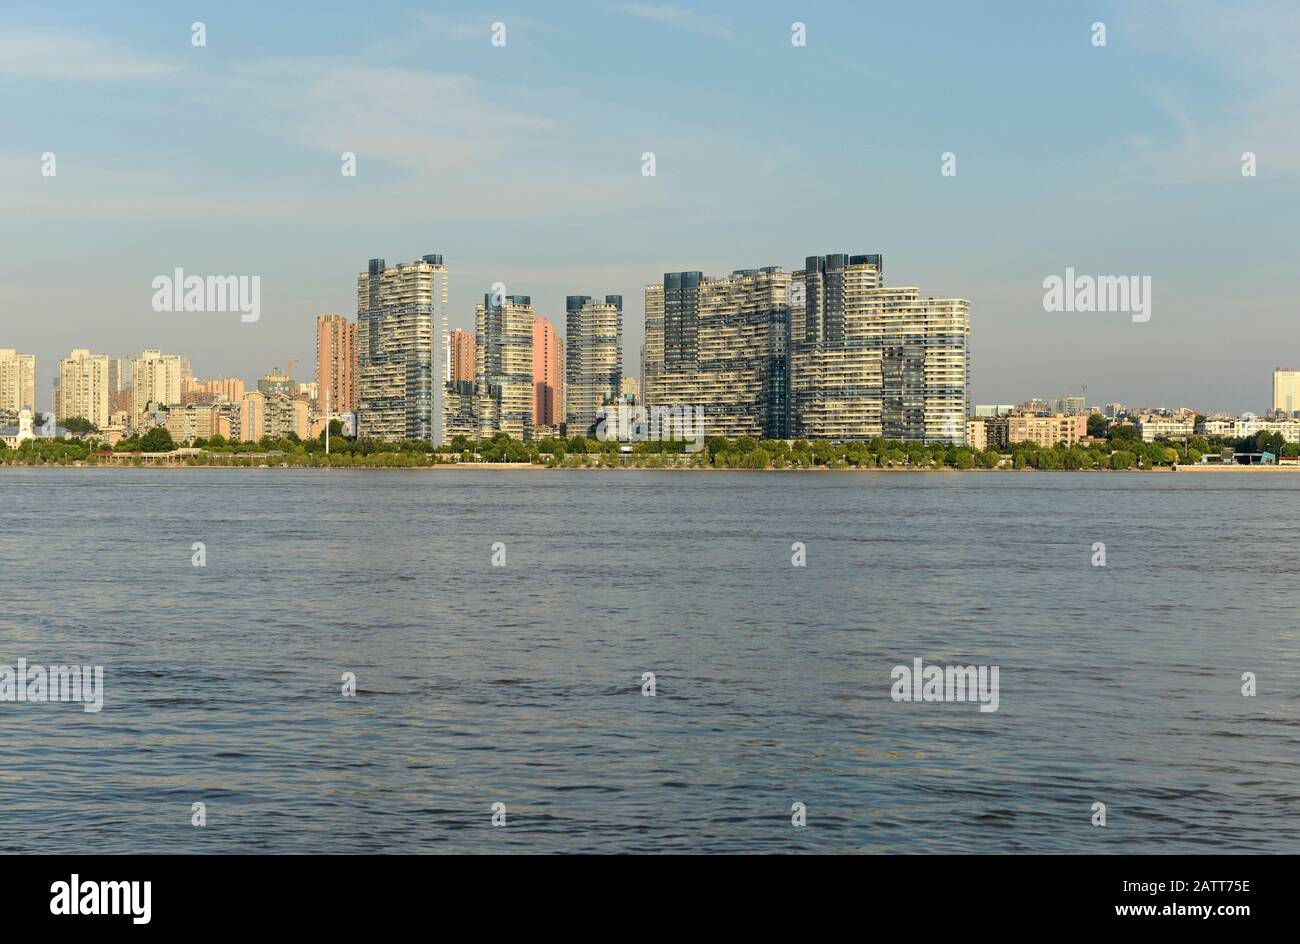 View of apartment buildings by Wuchang Yangtse riverside, Wuhan, China Stock Photo